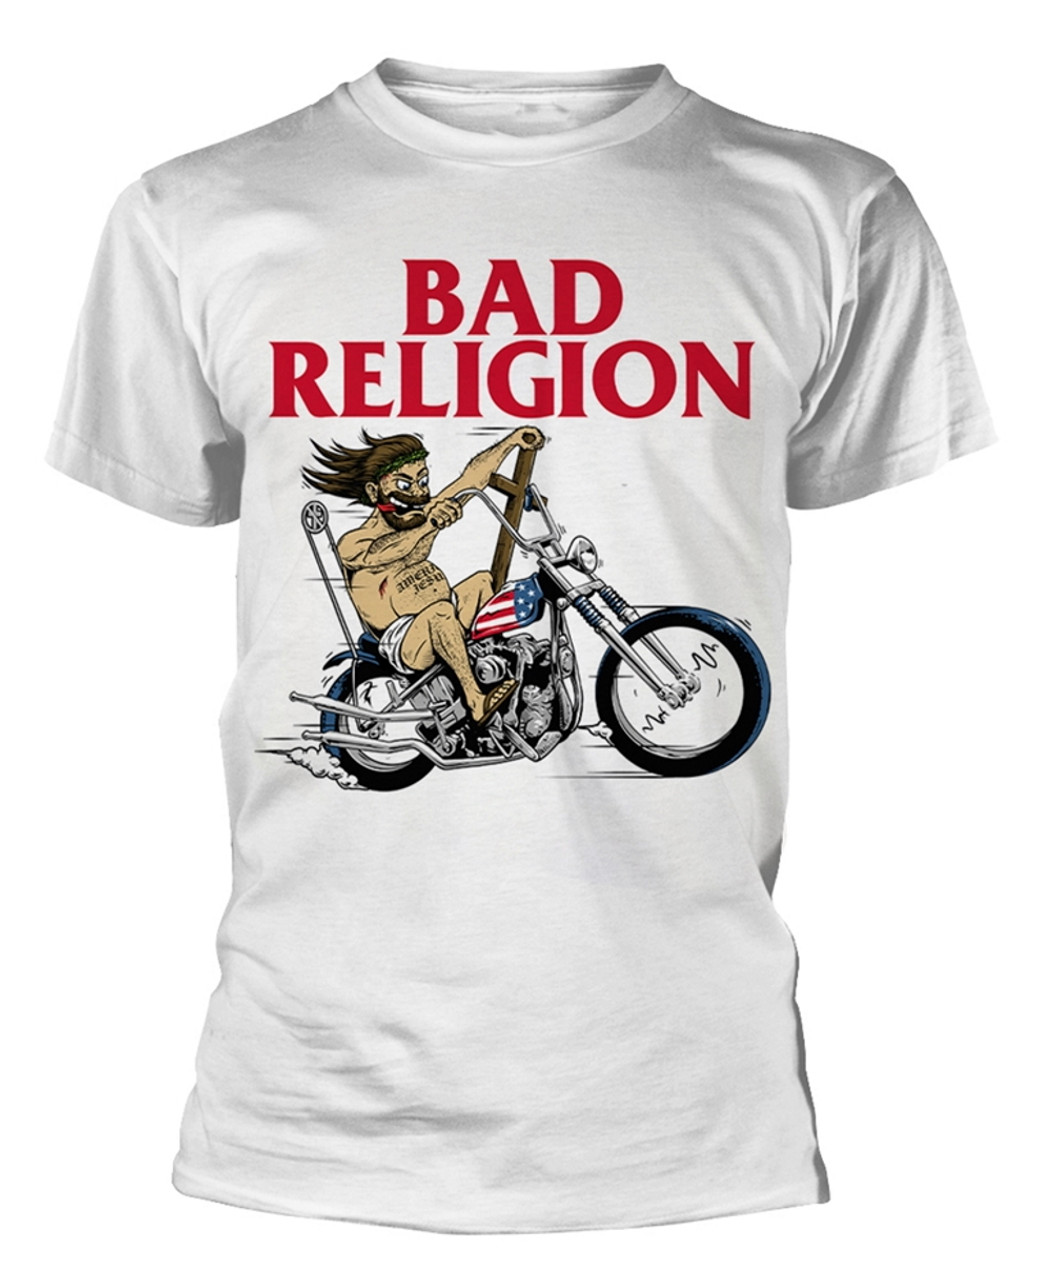 Bad Religion 'American Jesus' (White) T-Shirt